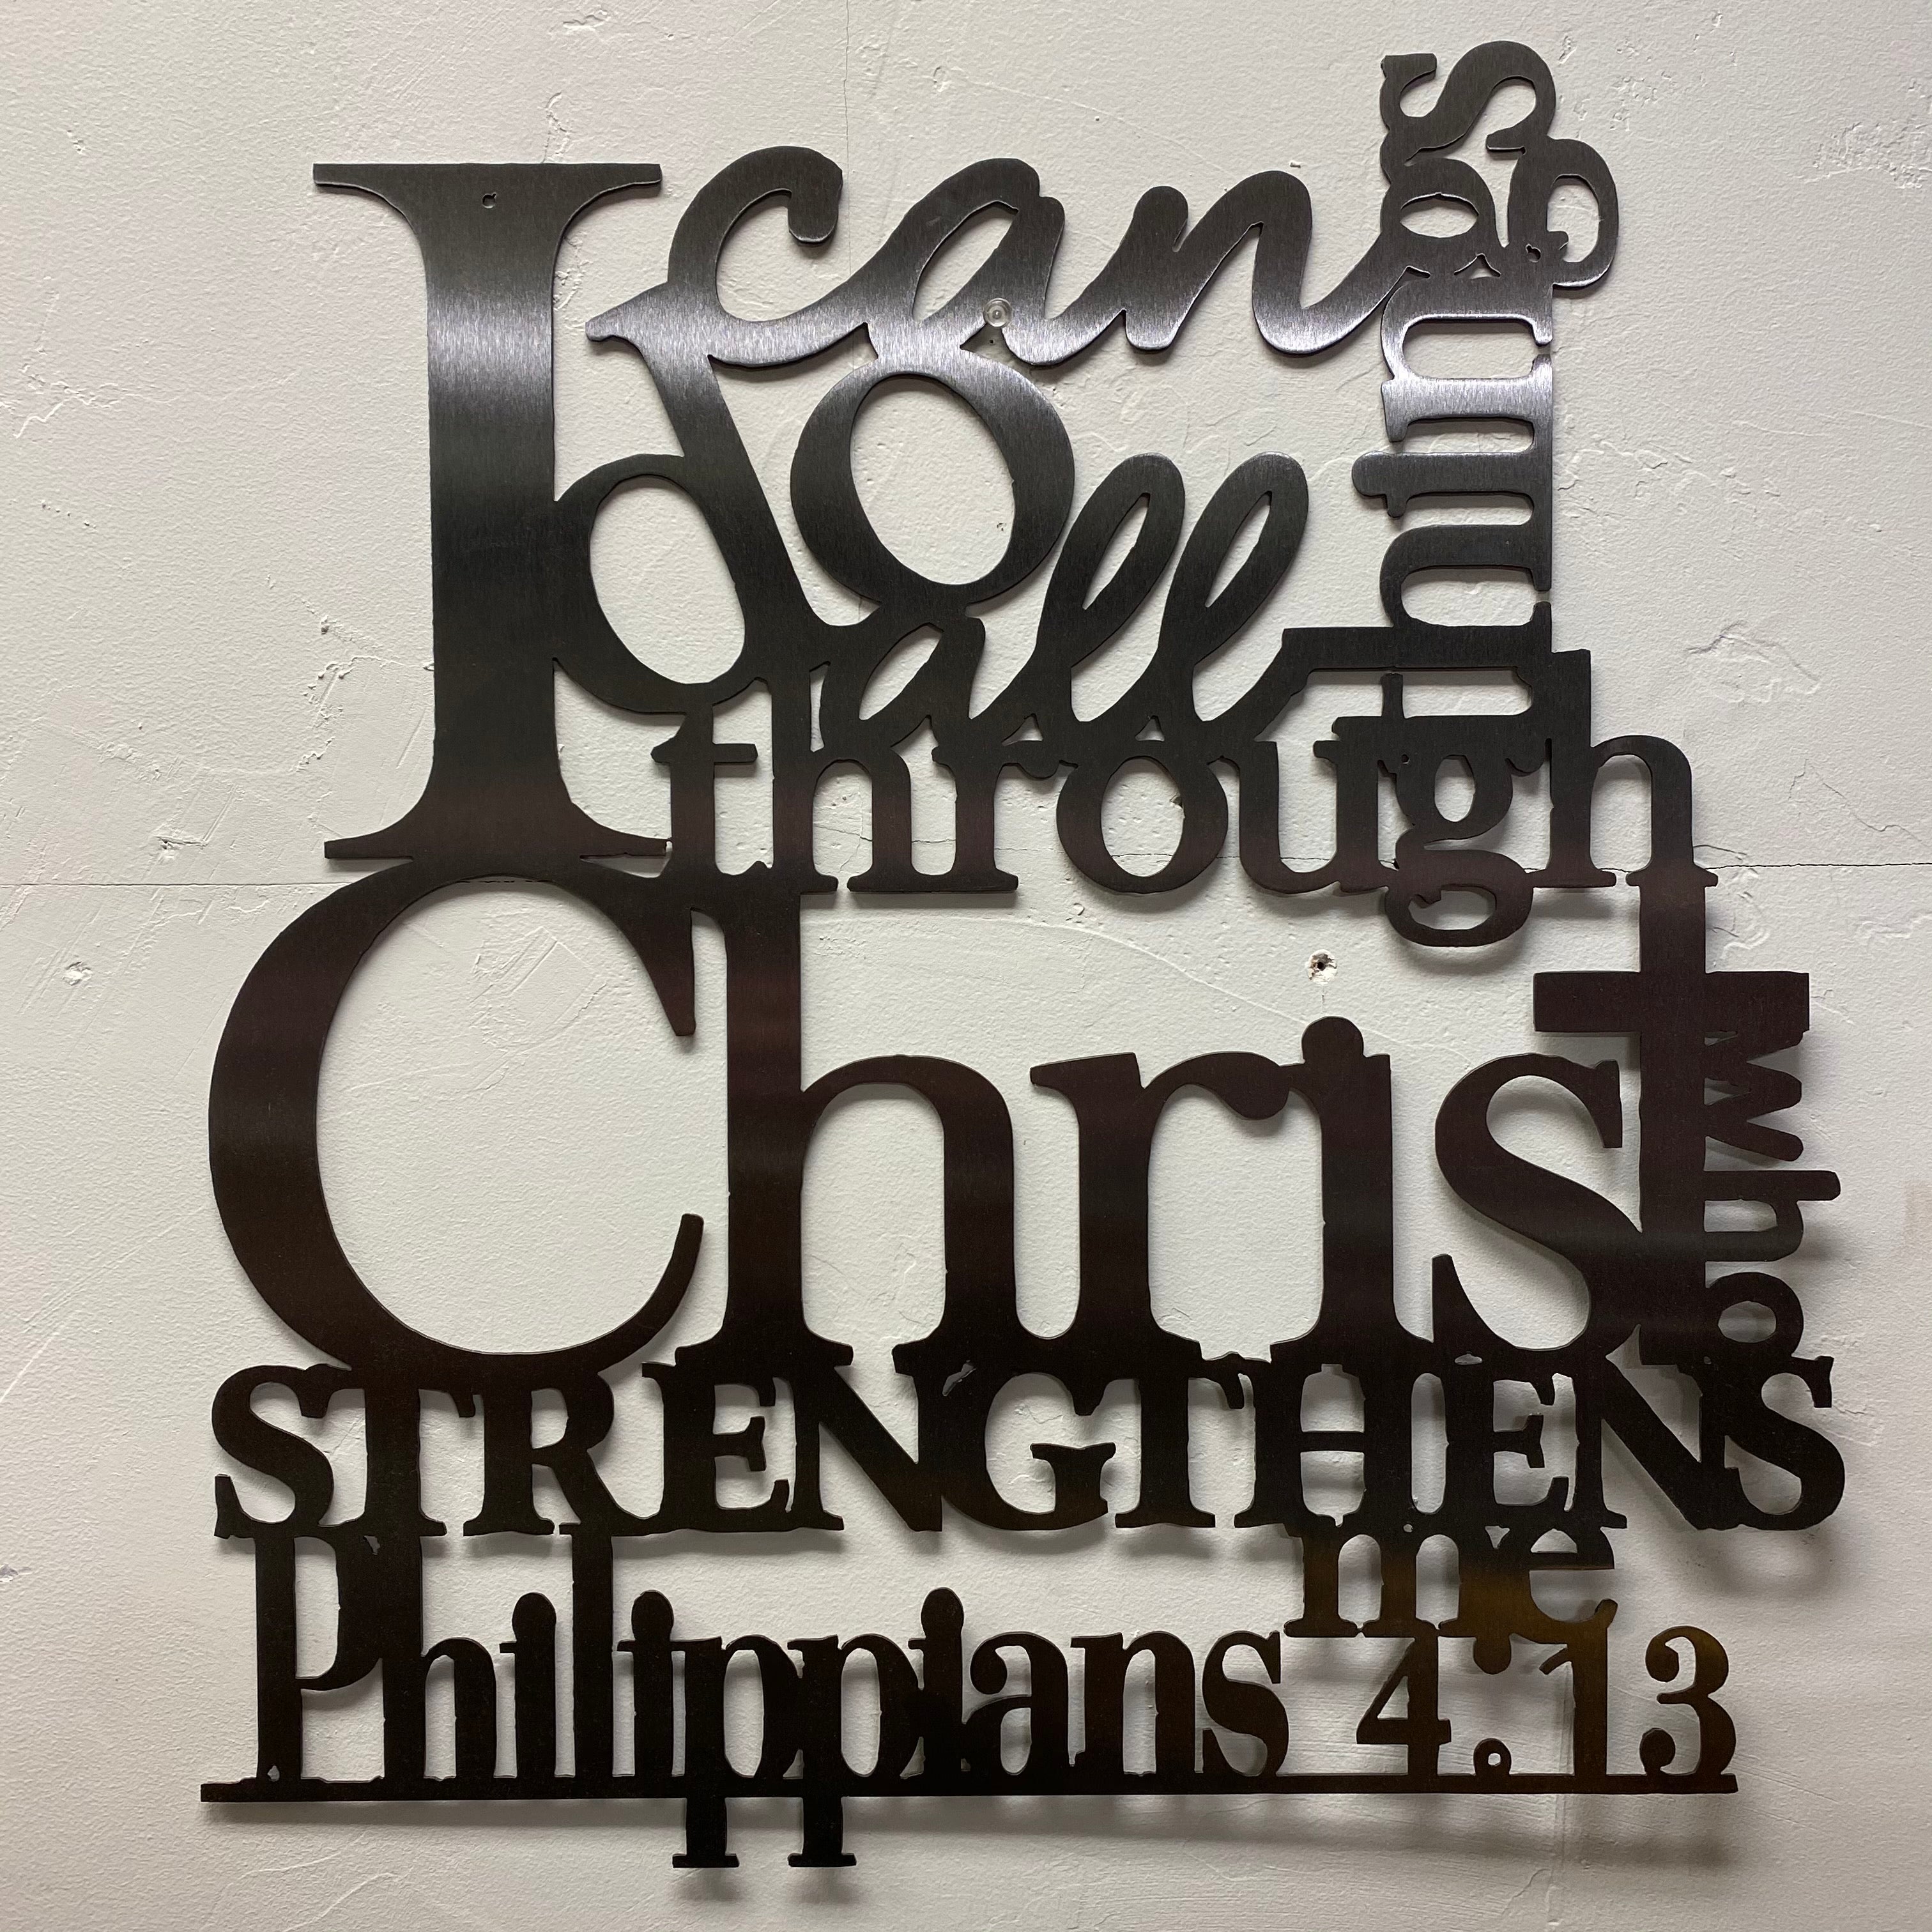 All things through Christ